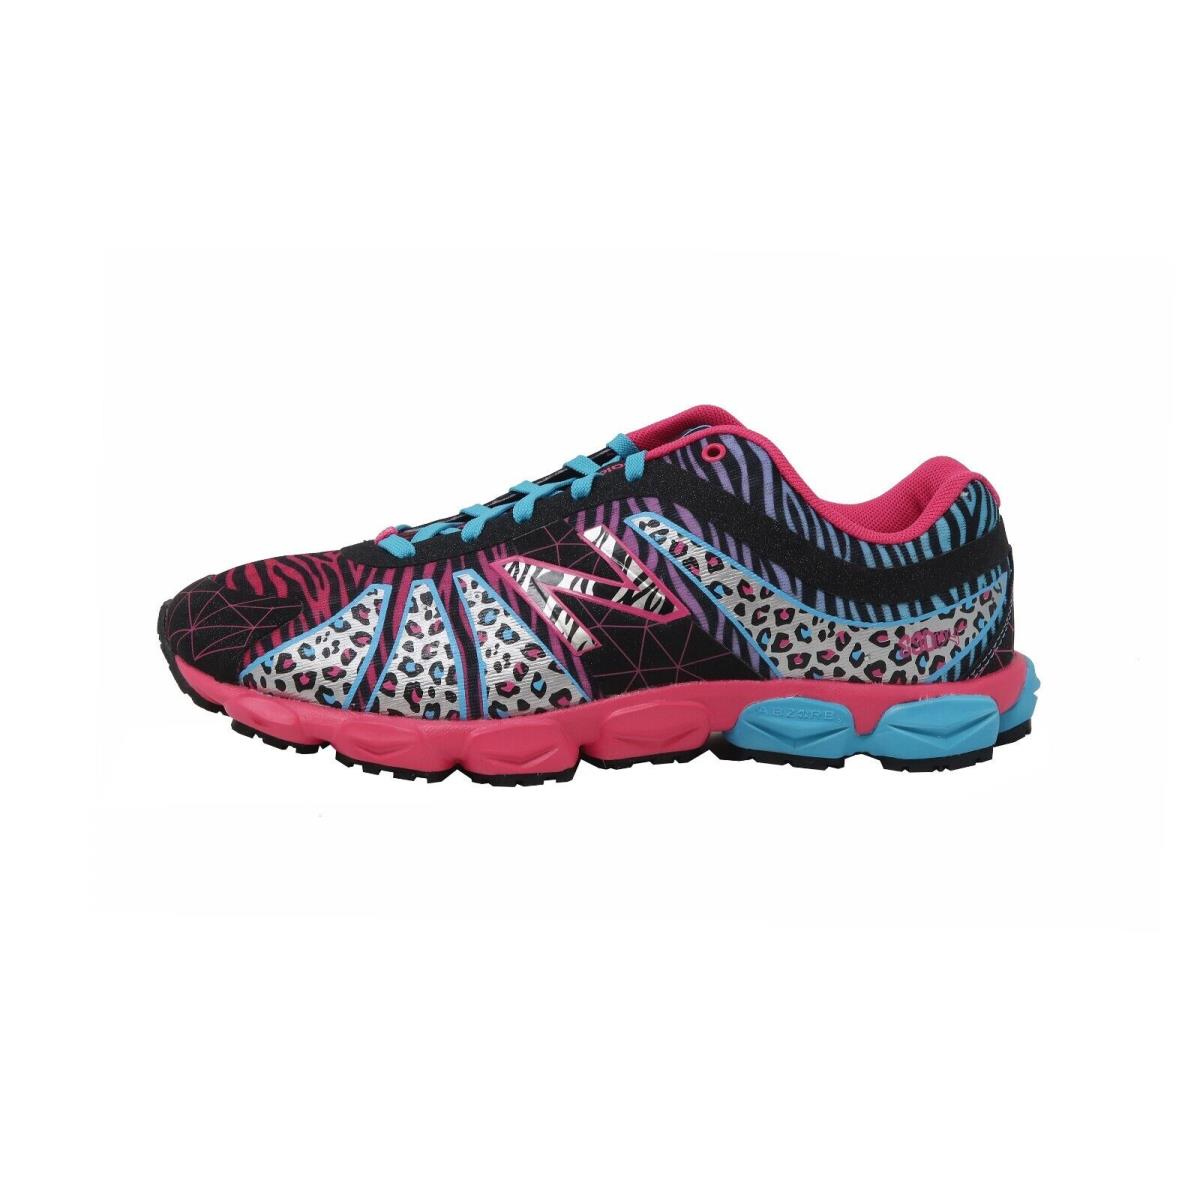 New Balance Big Kids Girl Running Shoes Sneakers KJ890FPG - Multi Color